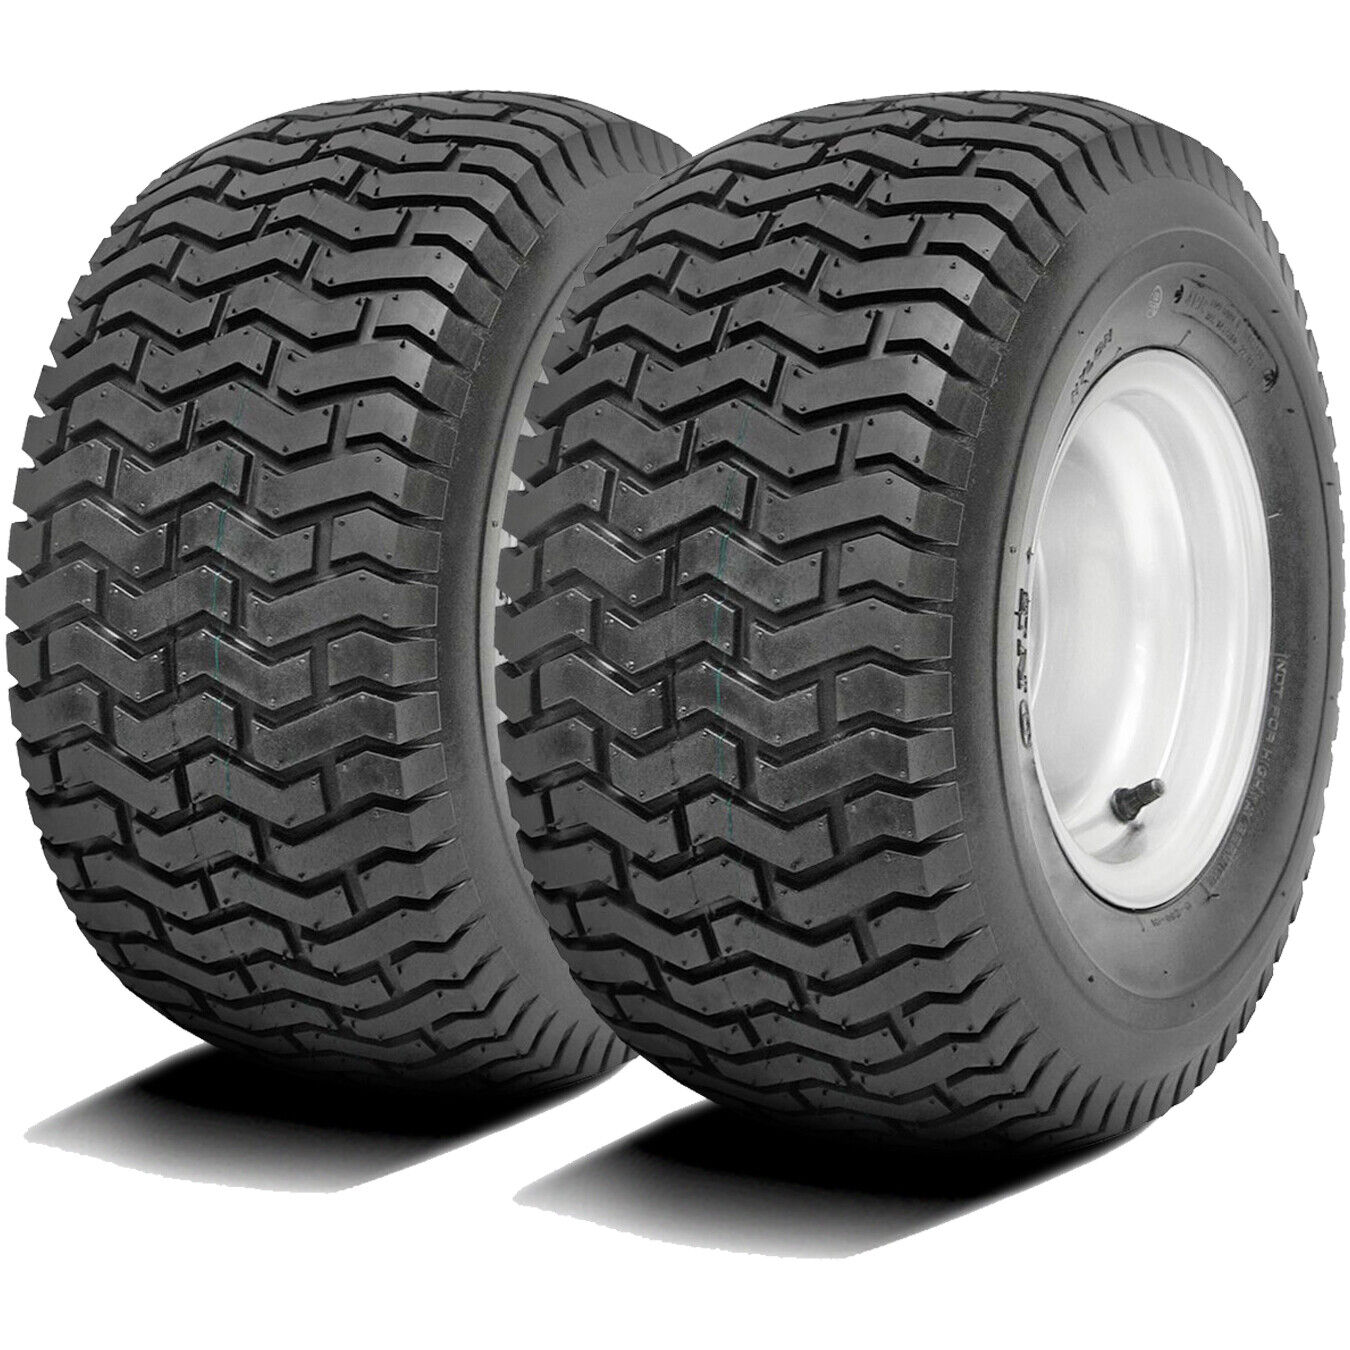 2 Tires 23X8.50-12 Deestone D265 Lawn & Garden 84A3 Load 4 Ply (DC)